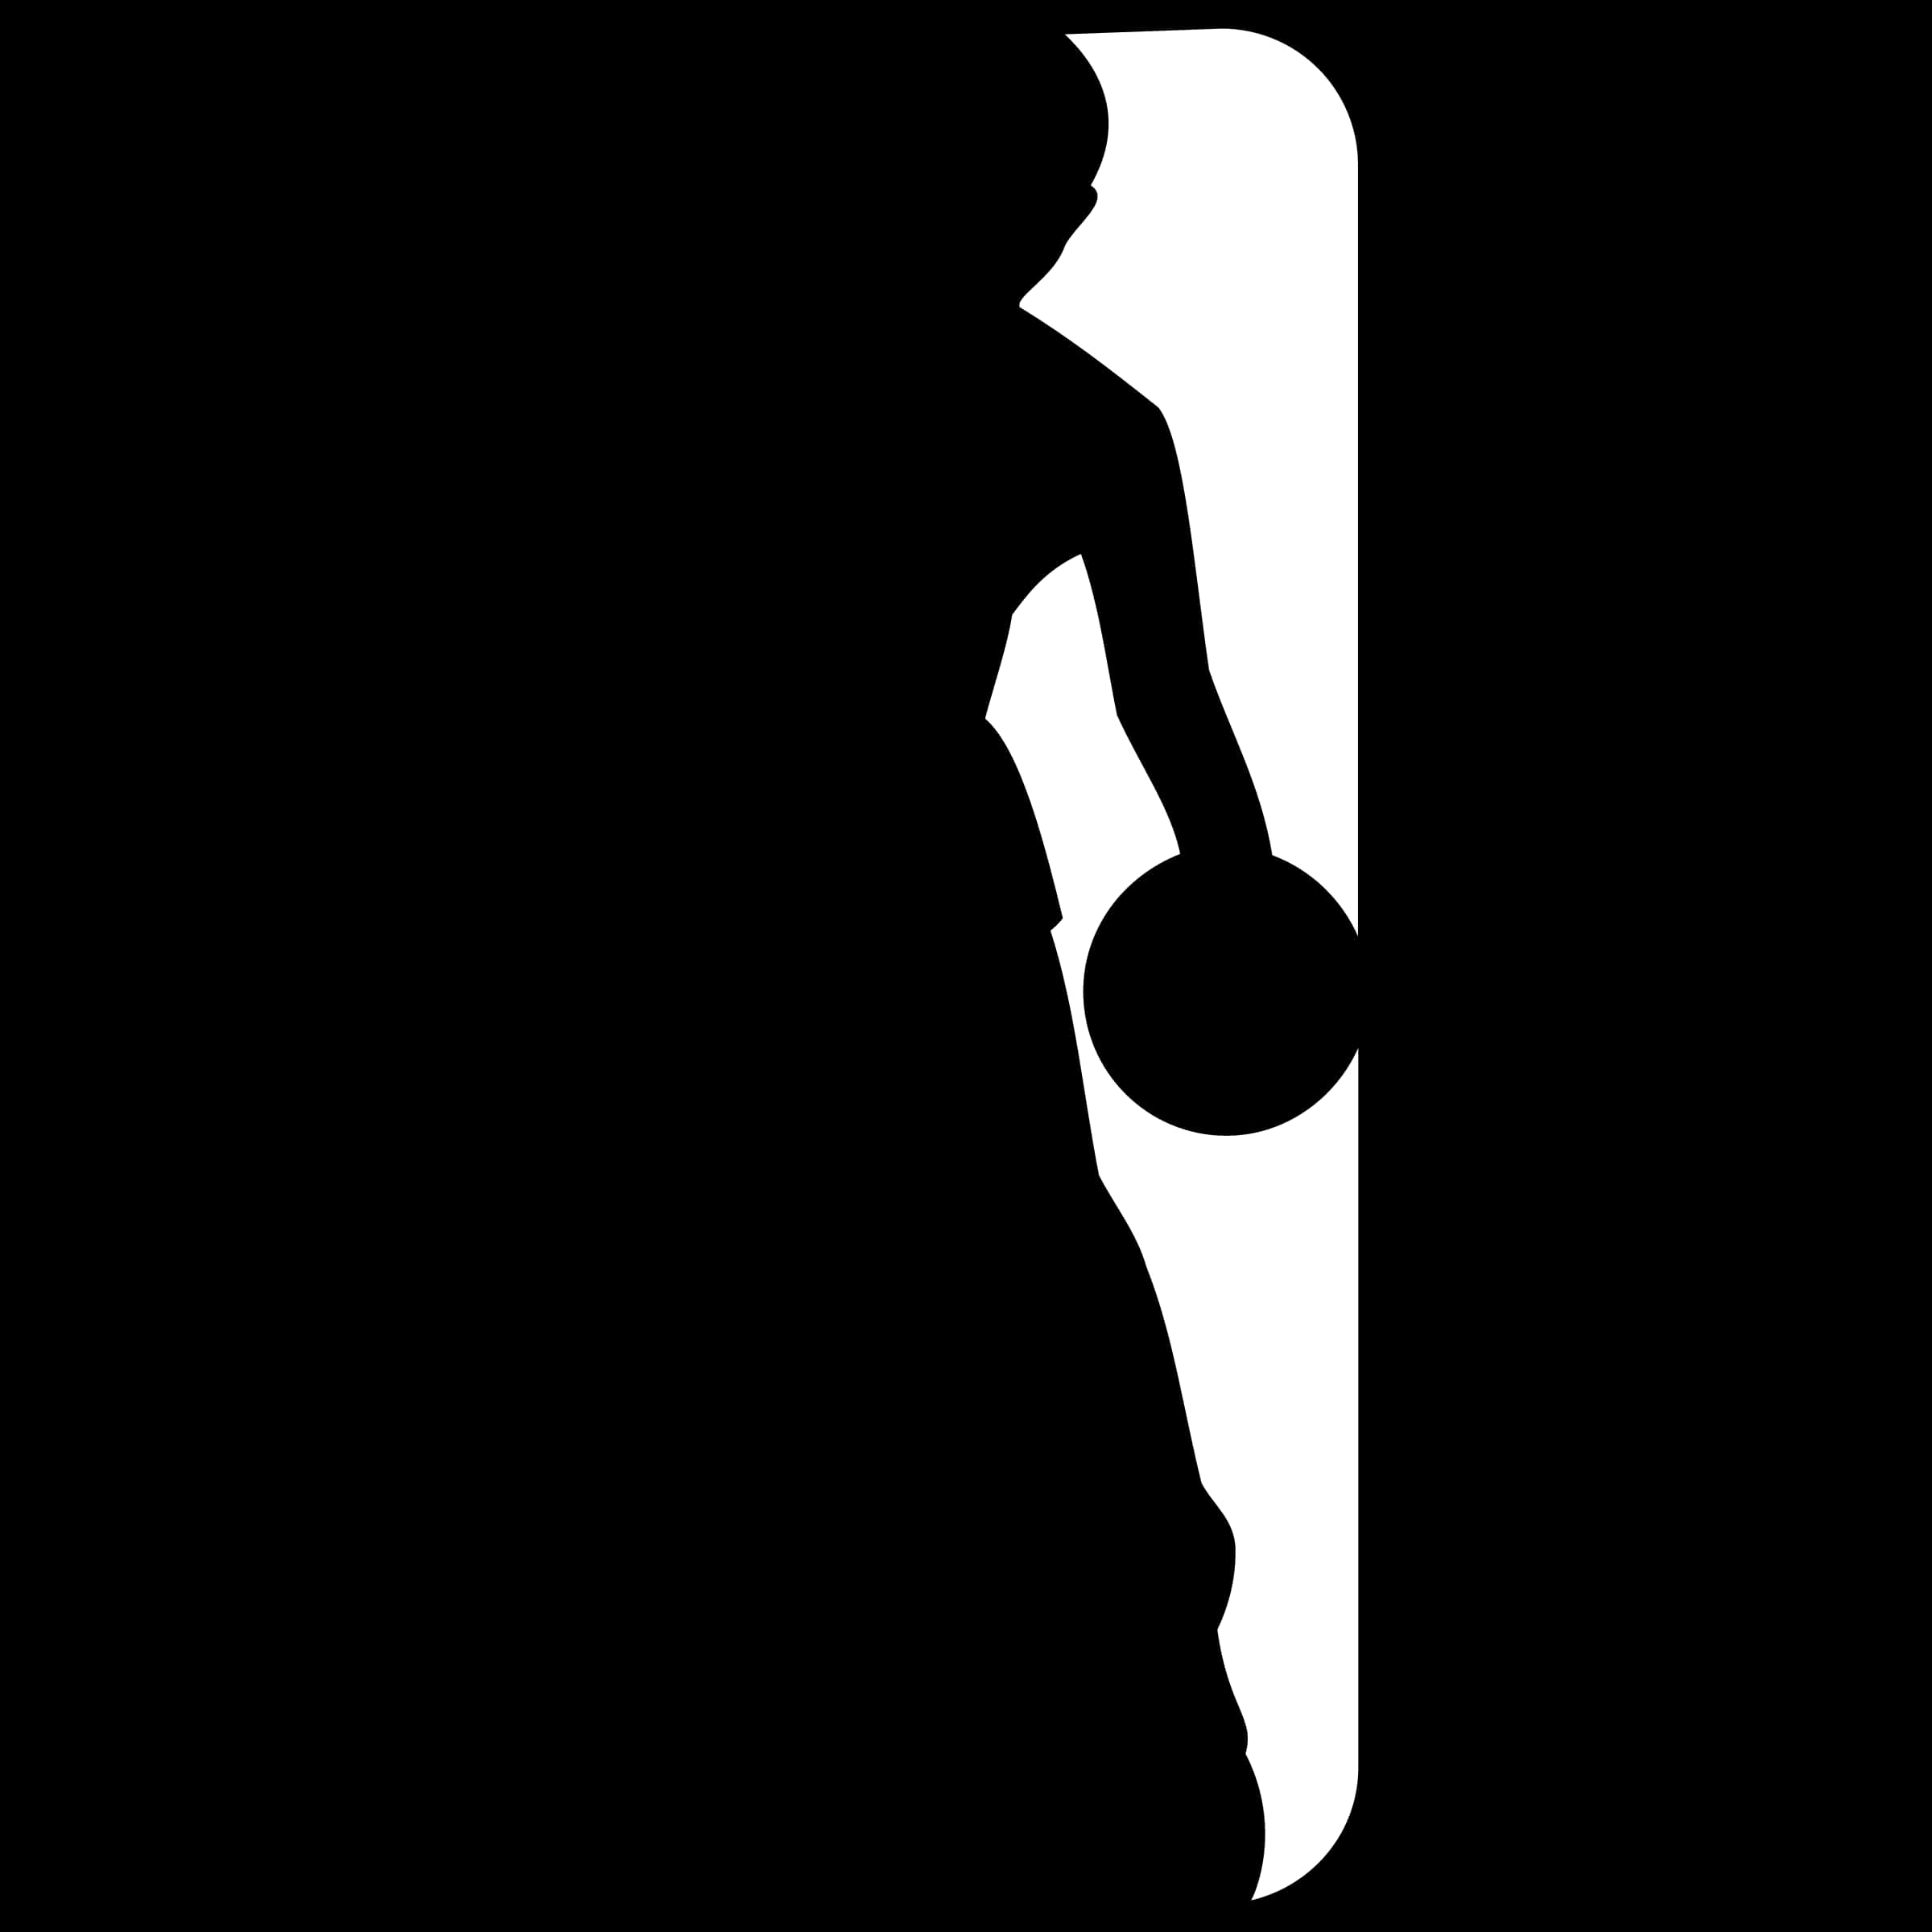 N B A Logo Silhouette Basketball Player PNG